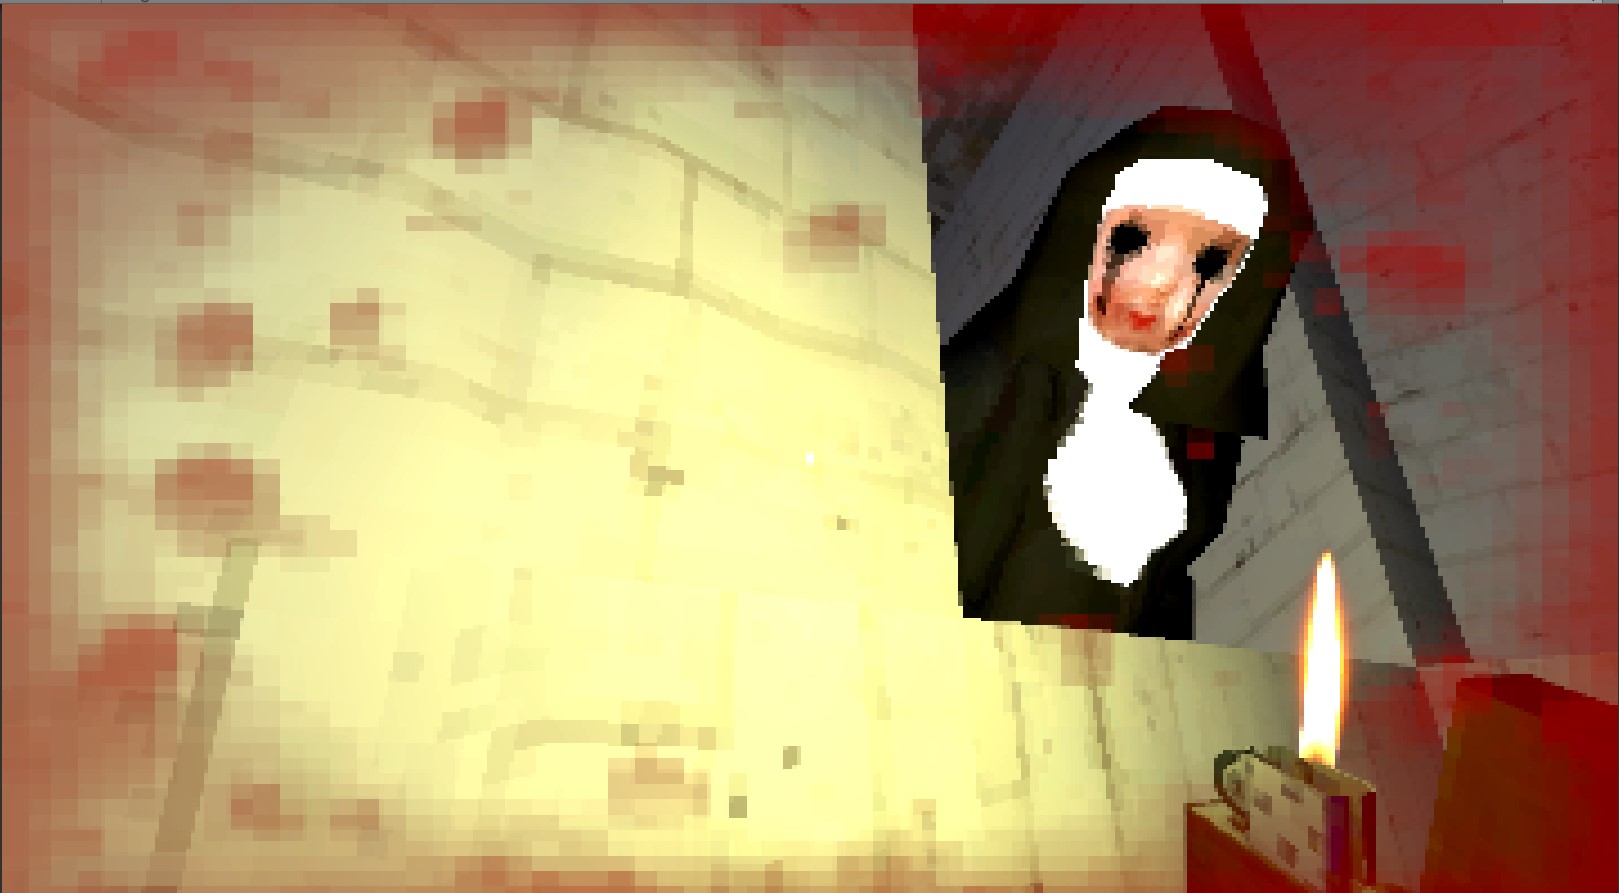 Nun massacre free